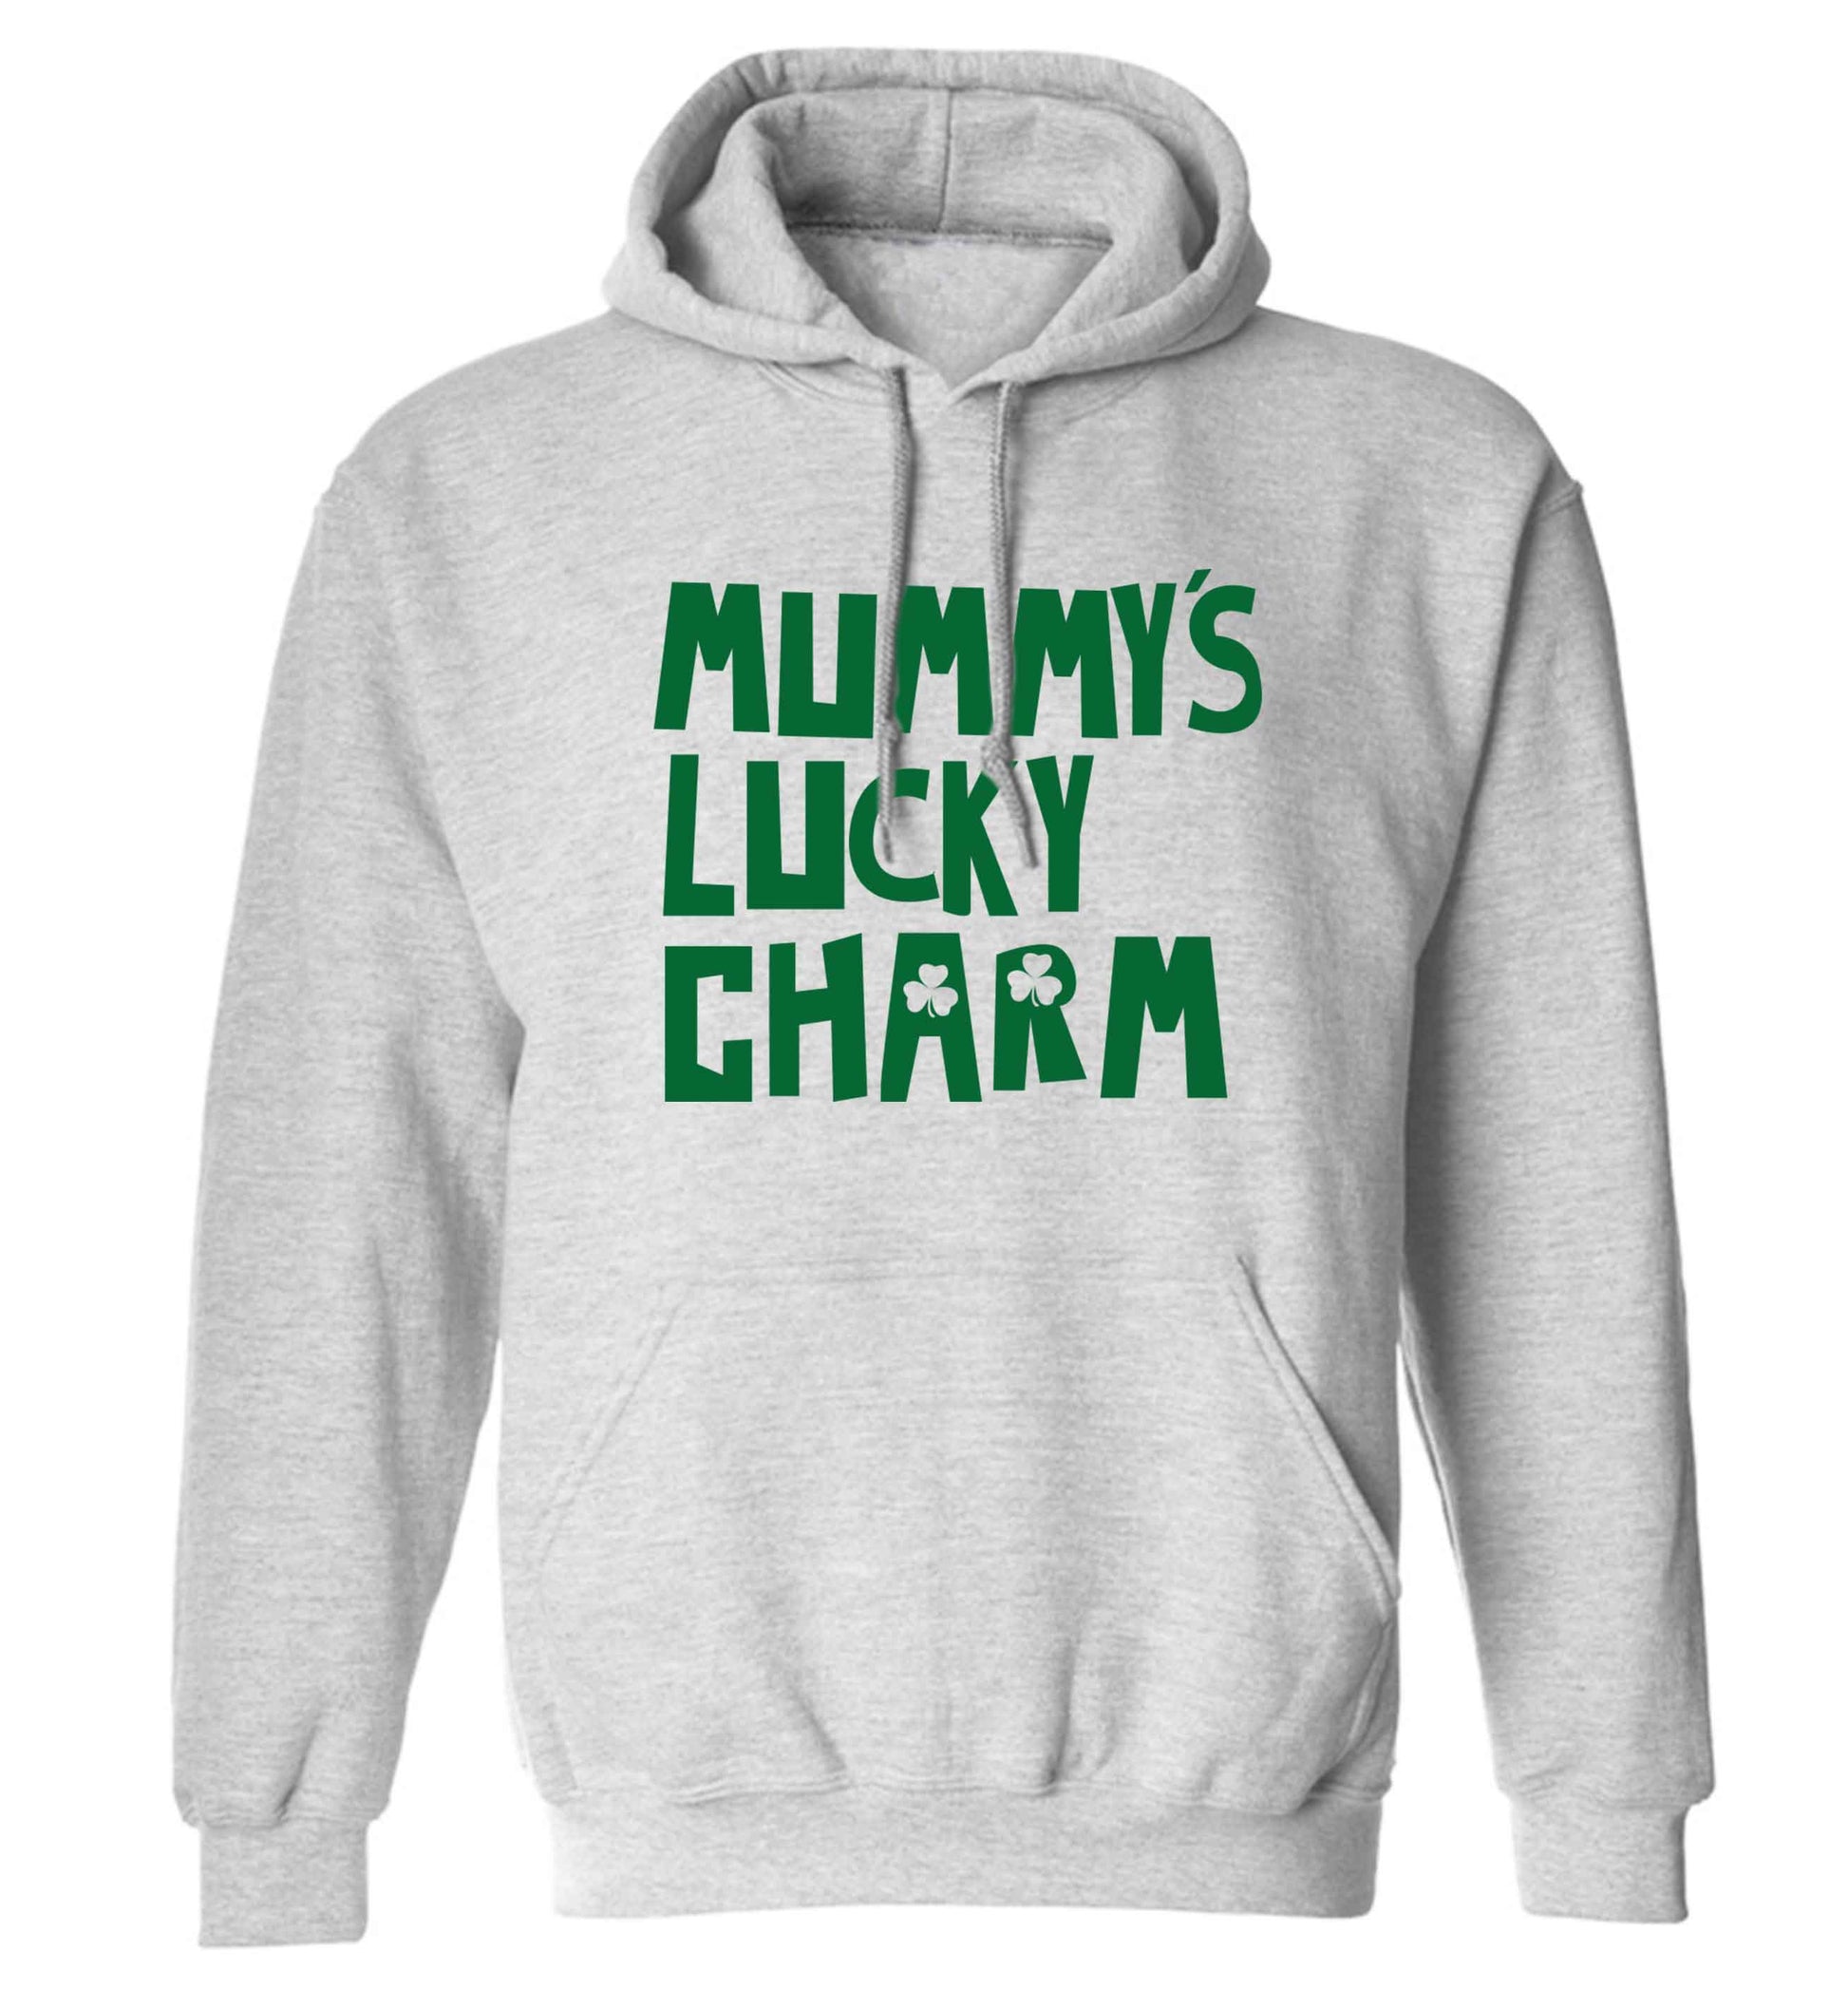 Mummy's lucky charm adults unisex grey hoodie 2XL